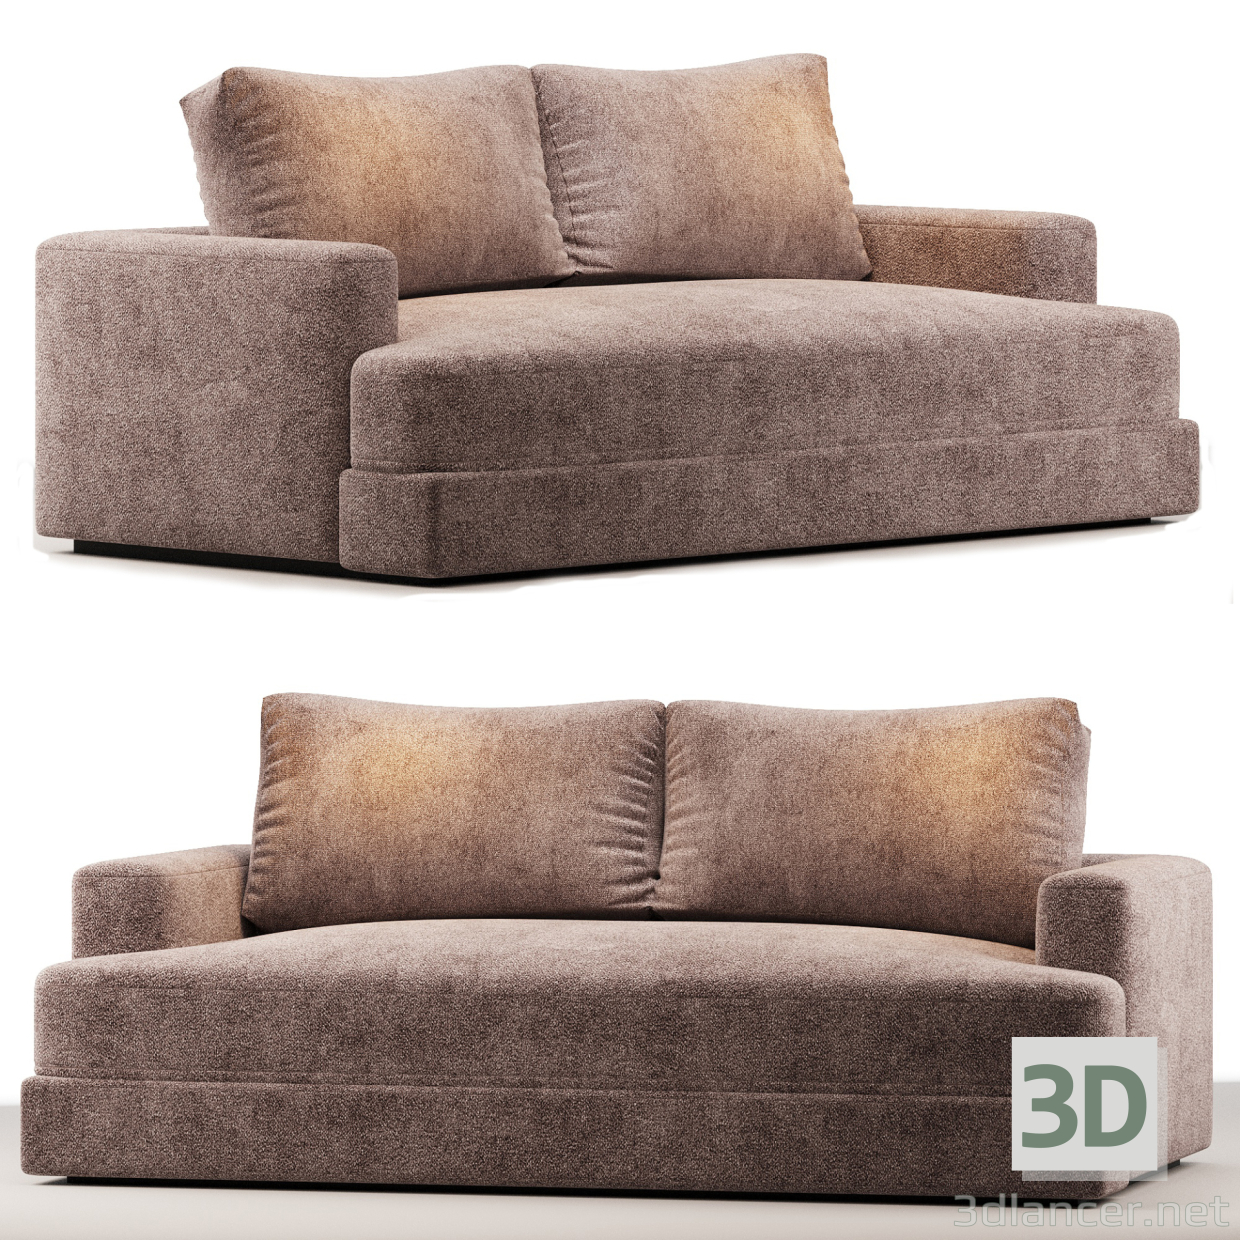 3d The Varick Sofa model buy - render